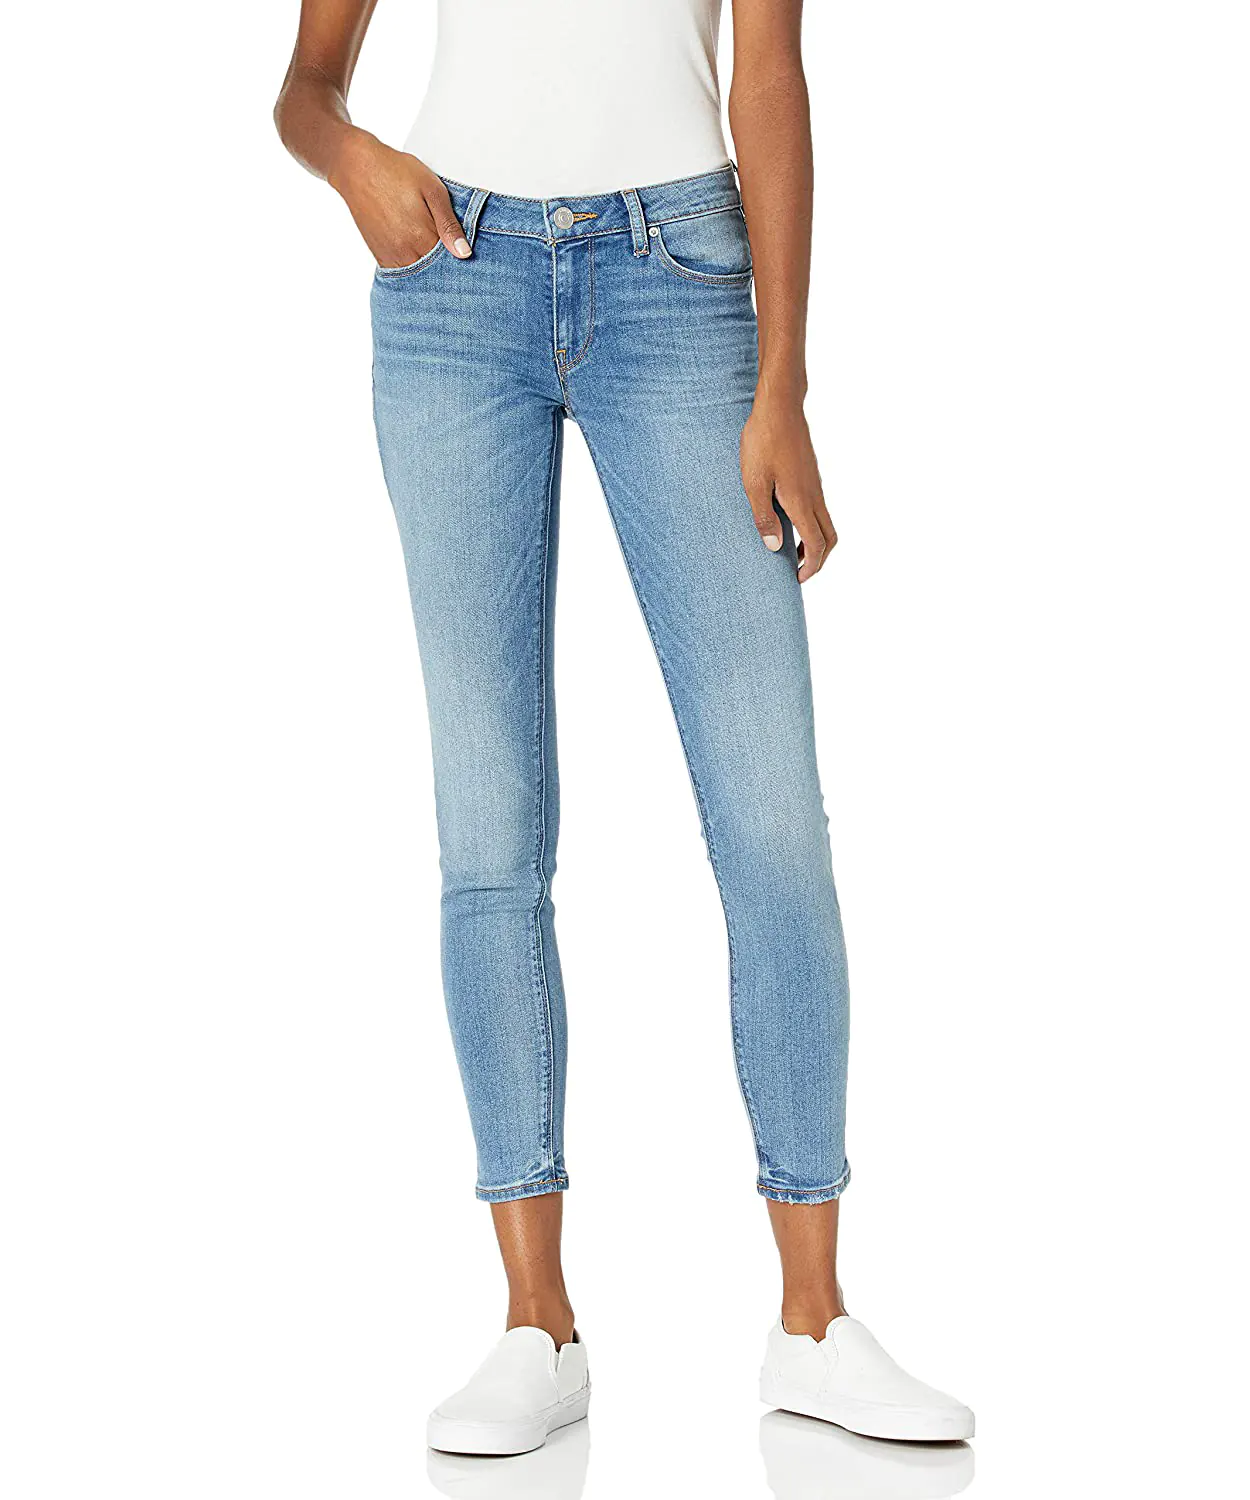 15 Best Low-Rise Jeans to Wear This Summer - HauteMasta